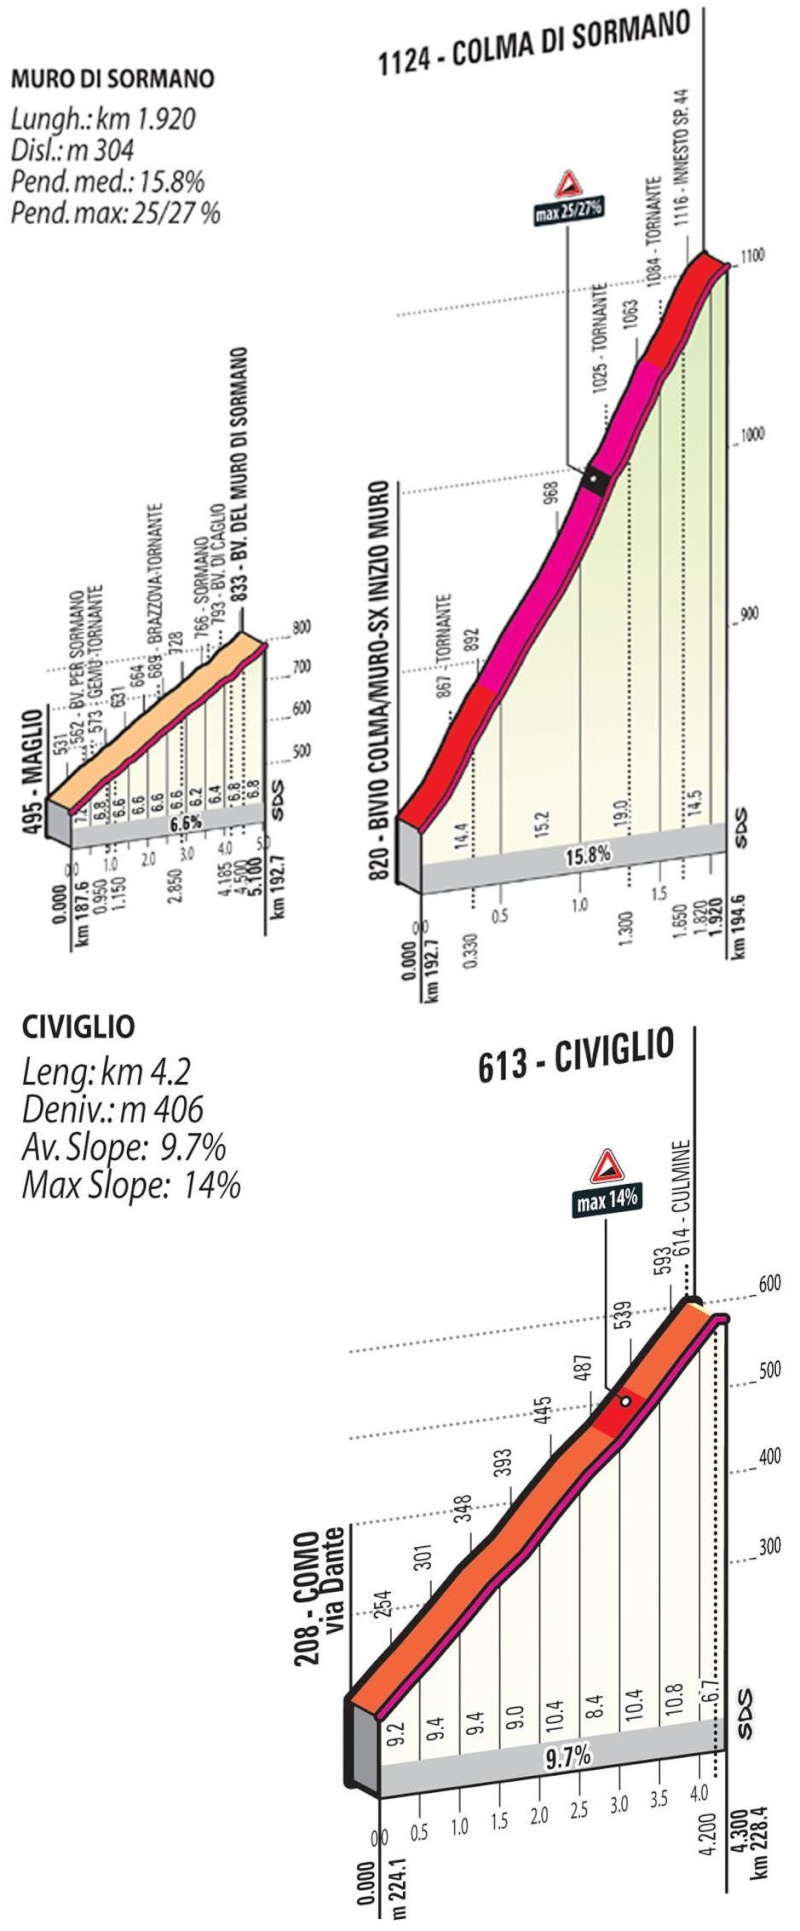 Giro - Il Lombardia (Giro di Lombardia) 2015 - (4 ottobre 2015) - Pagina 4 Sorman10